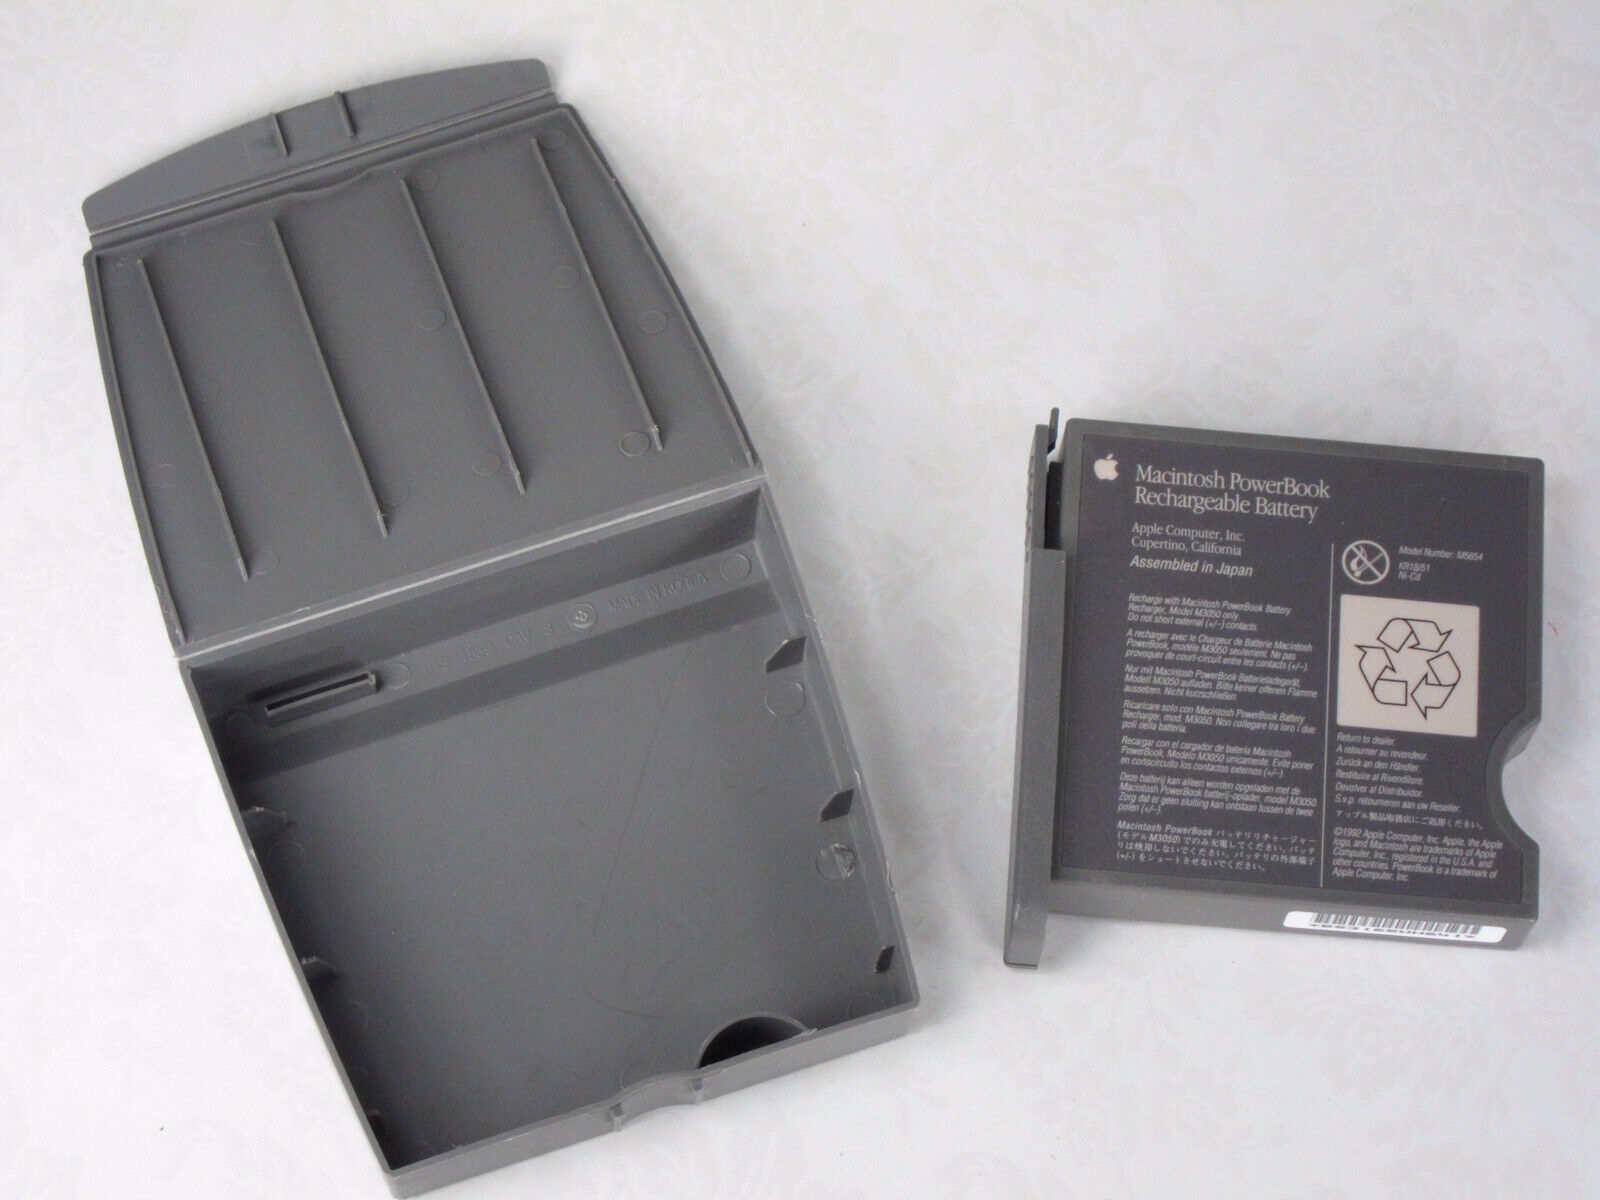 Apple Macintosh PowerBook Model: M5654 Rechargeable Battery & Case OEM Original